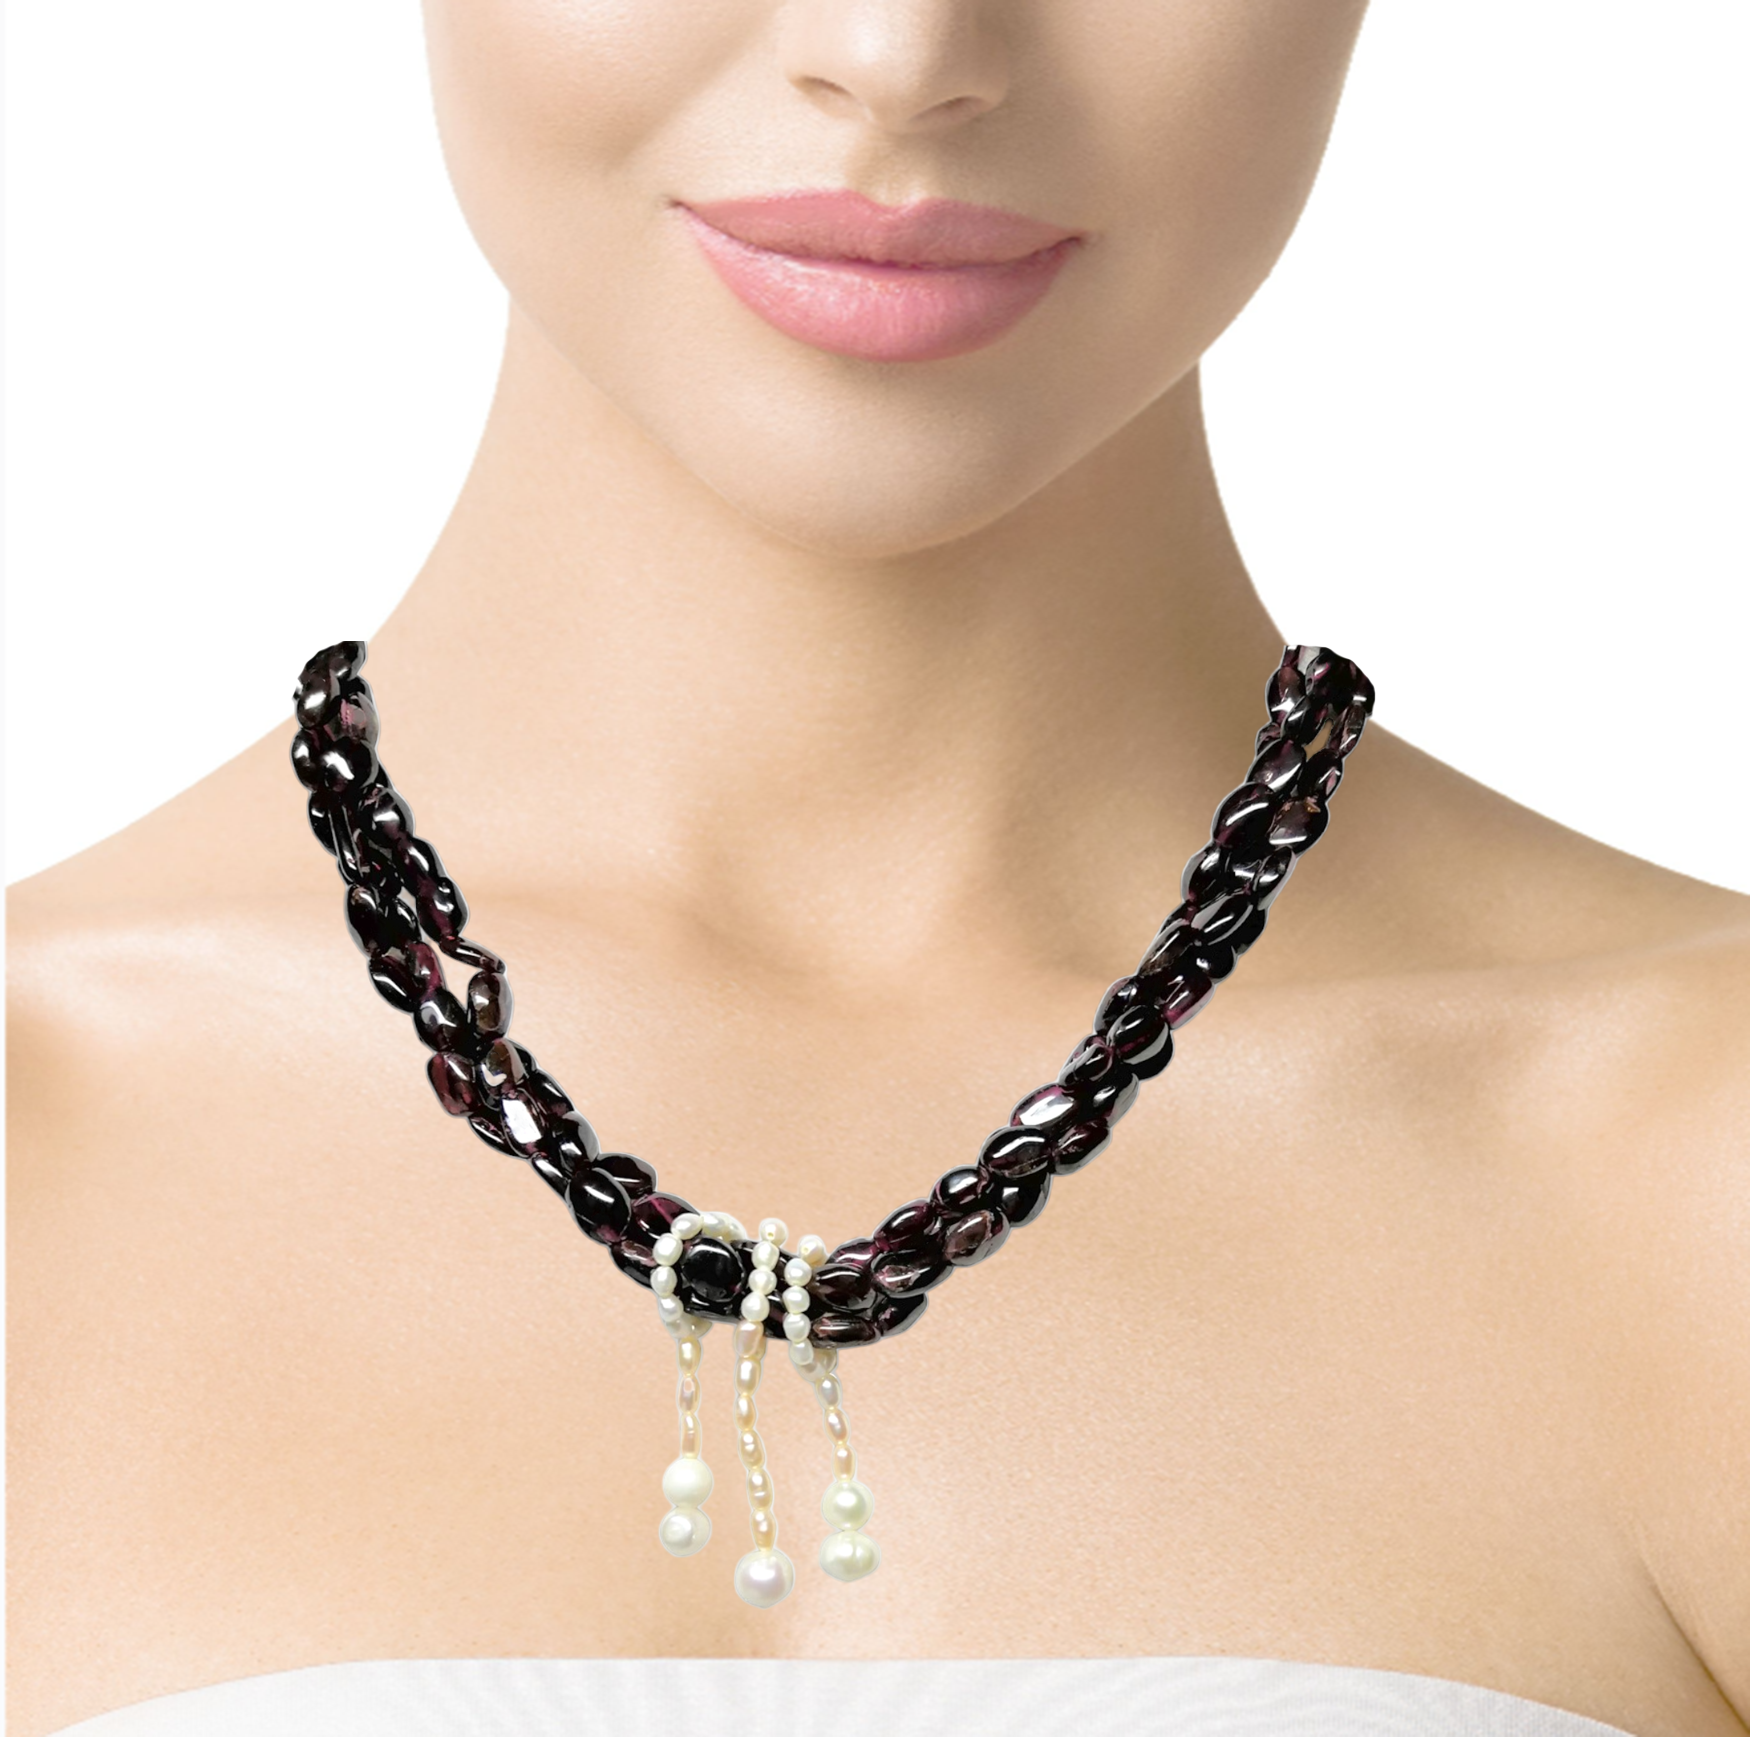 Natural Handmade Necklace 16"-18" Garnet Pearls Tassels Gem Beads Jewellery